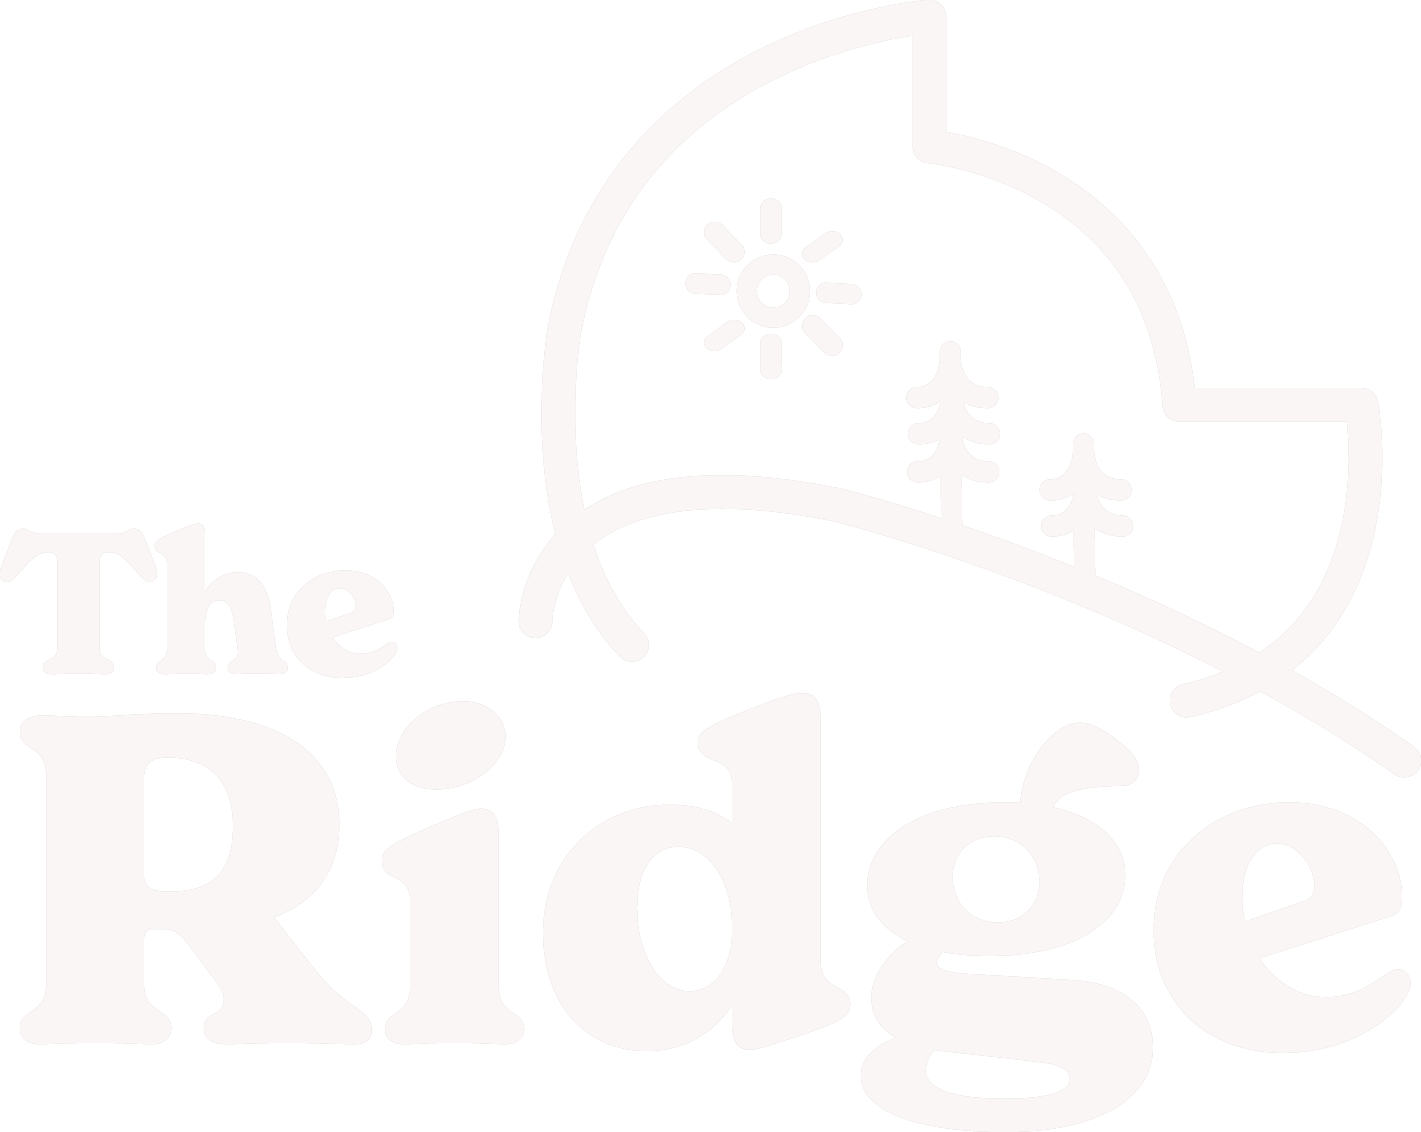 The Ridge Kennels